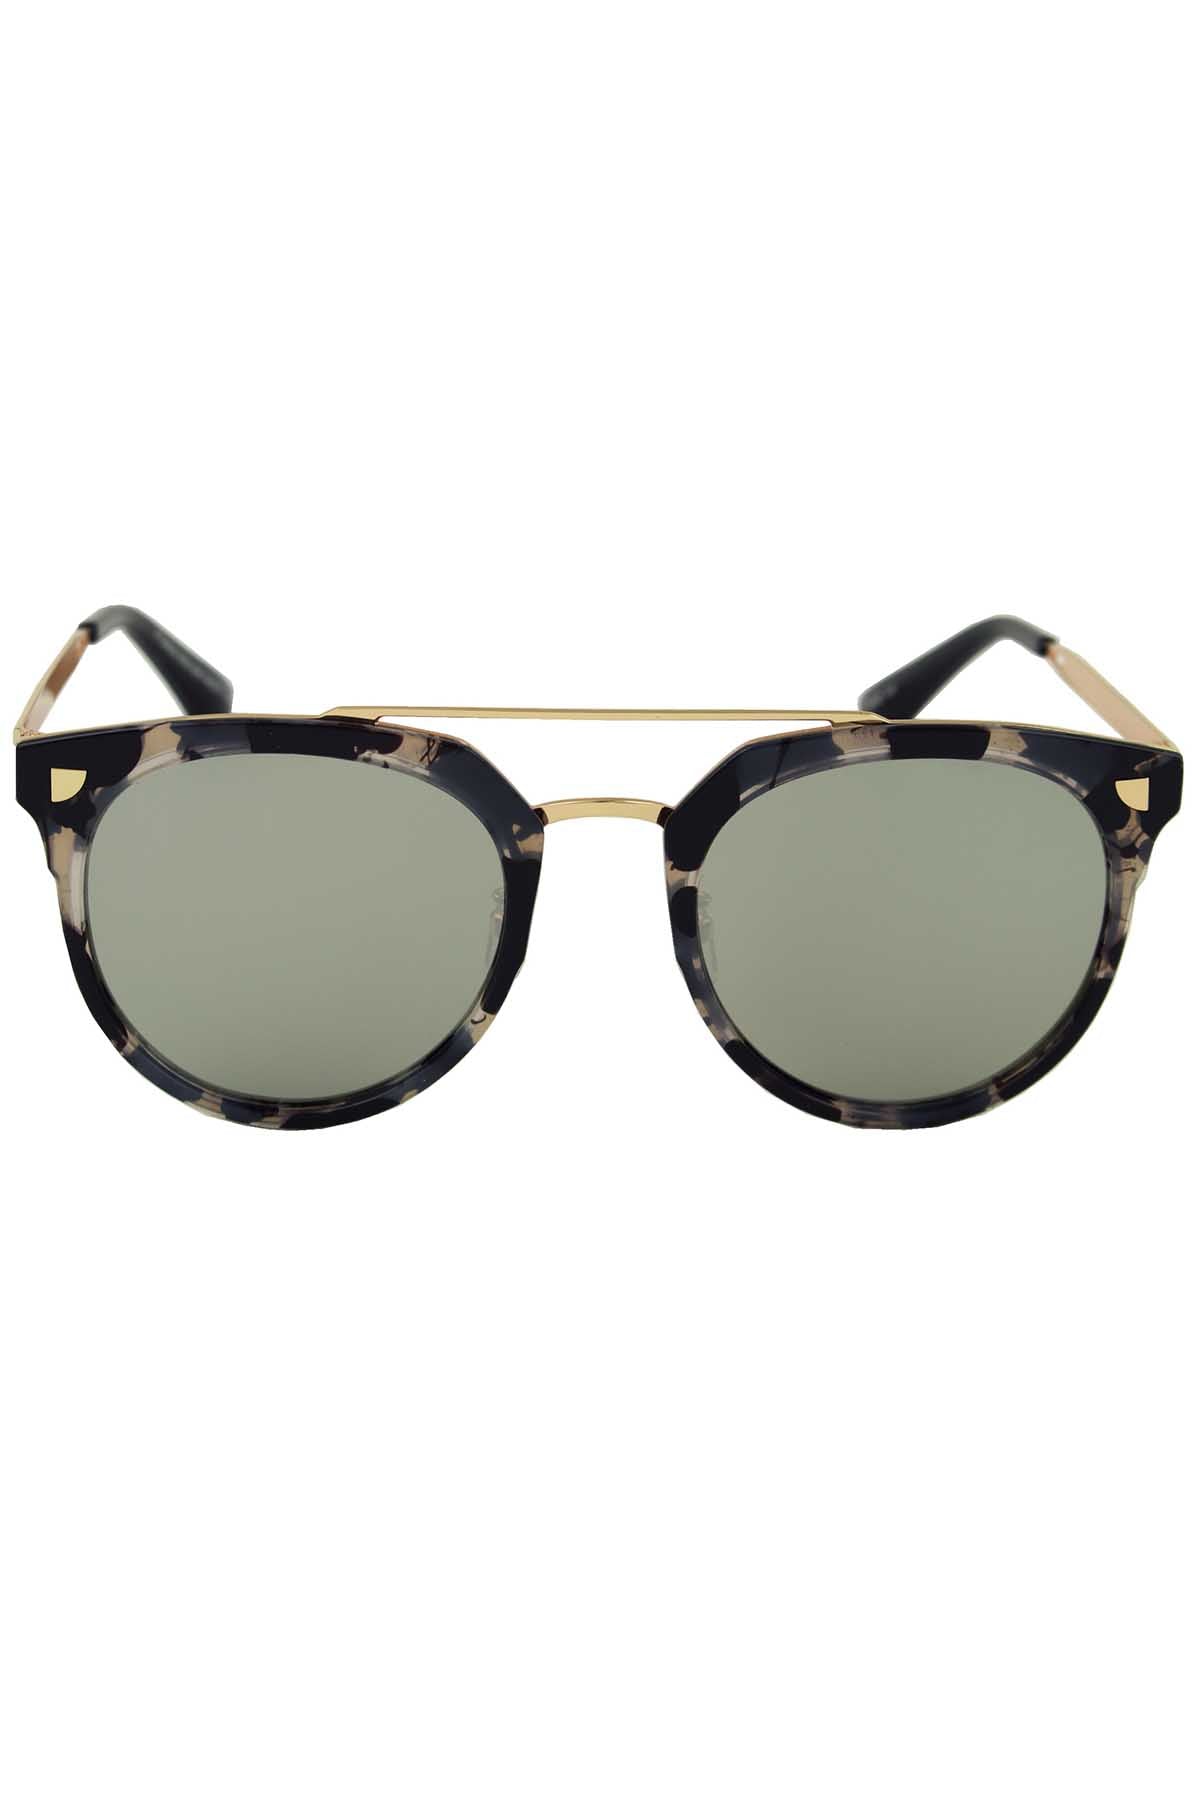 DIBI Tortoise-Shell Hollywood Sunglasses